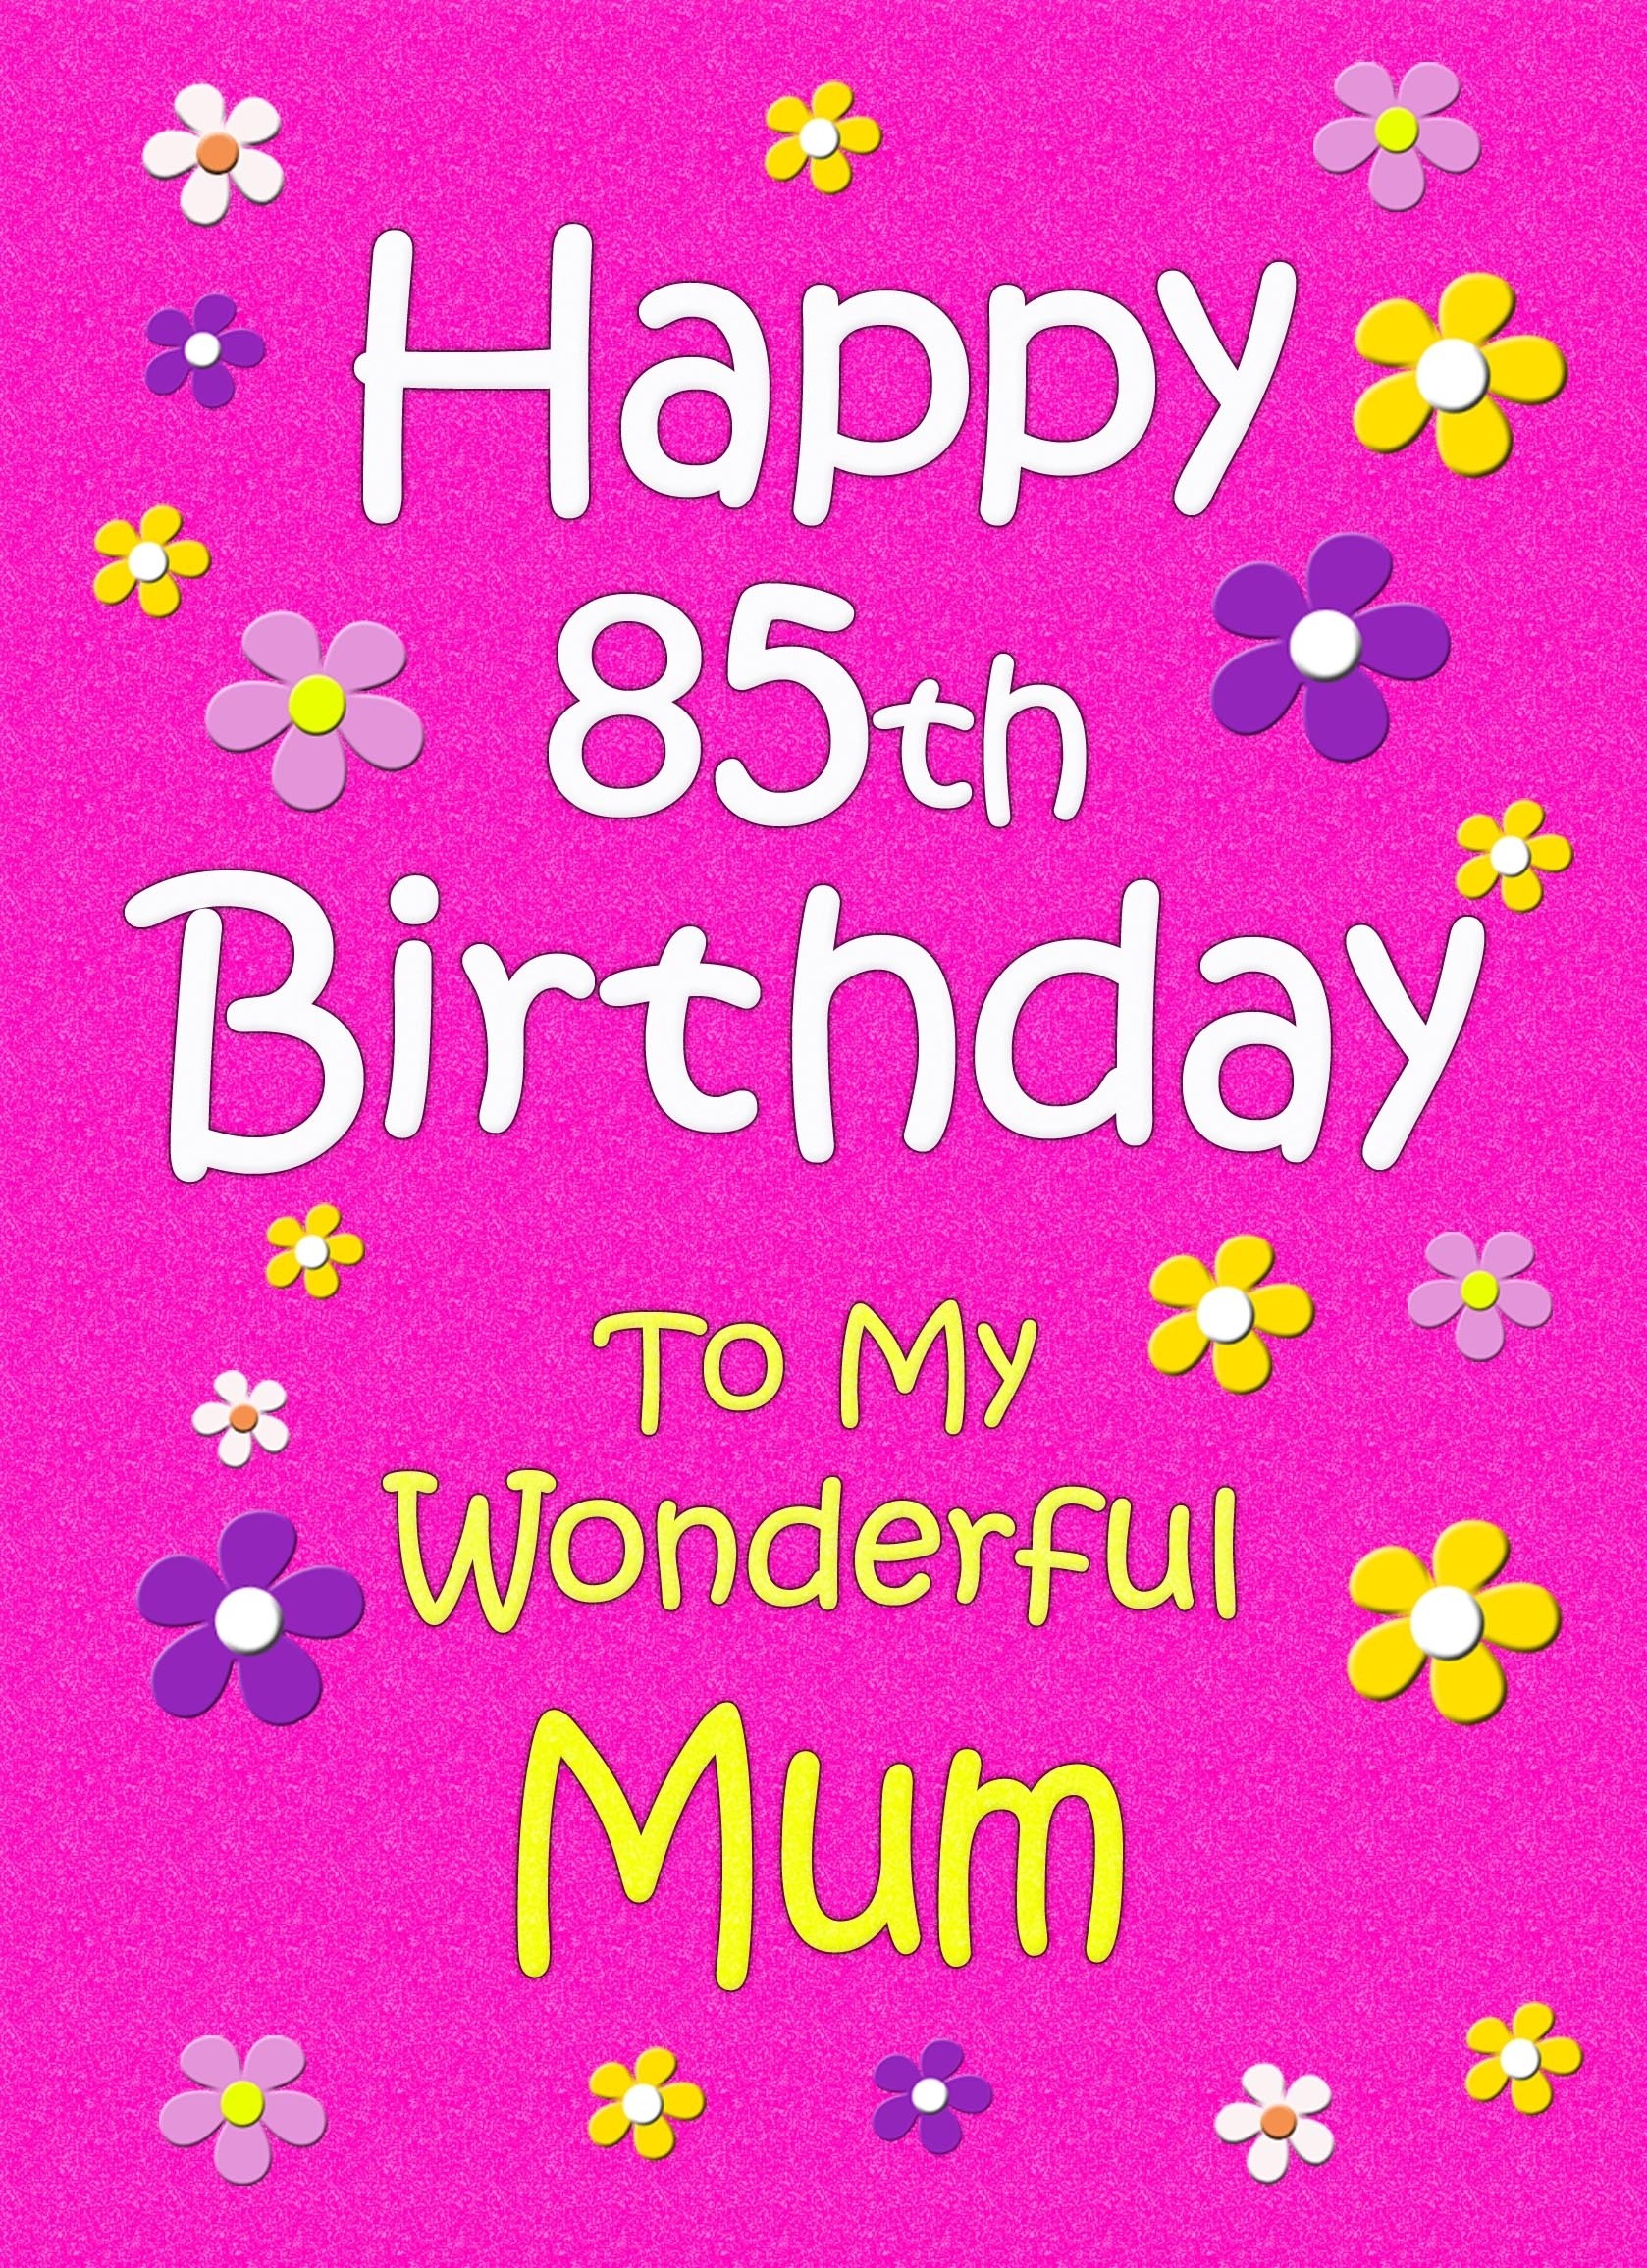 Mum 85th Birthday Card (Pink)